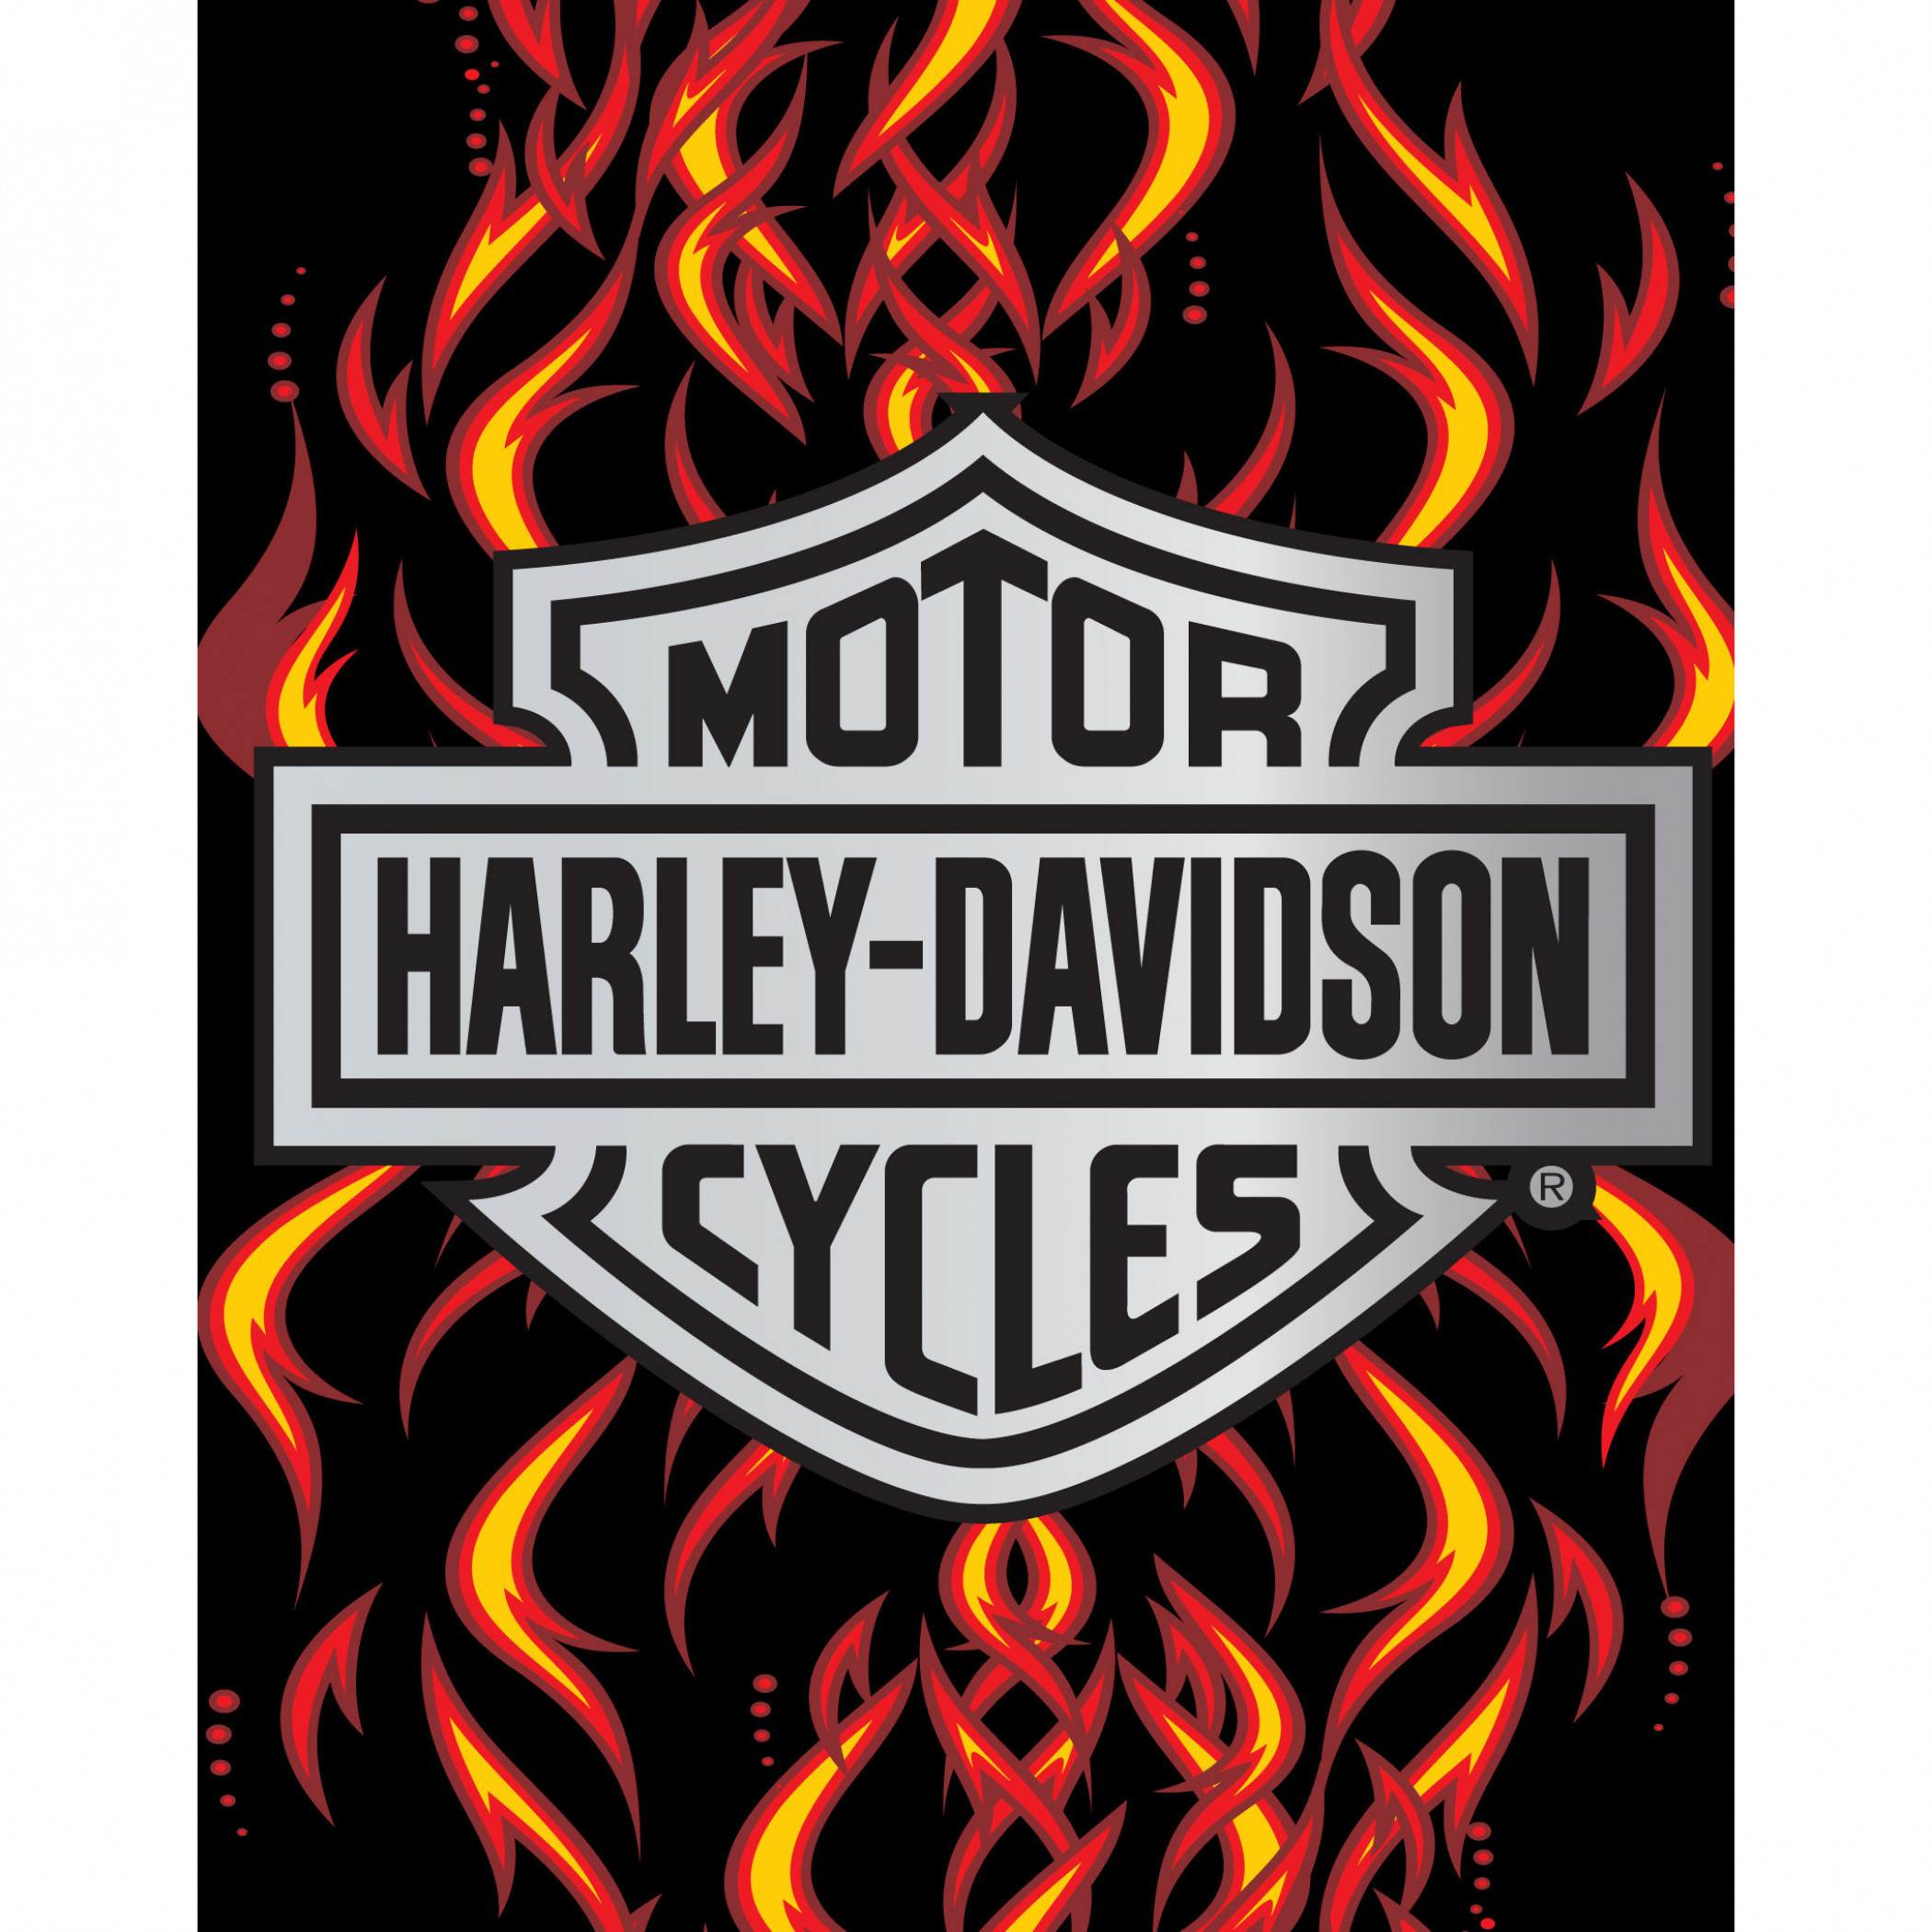 Harley Davidson History Bar & Shield  Beach Towel 54x68 inches 